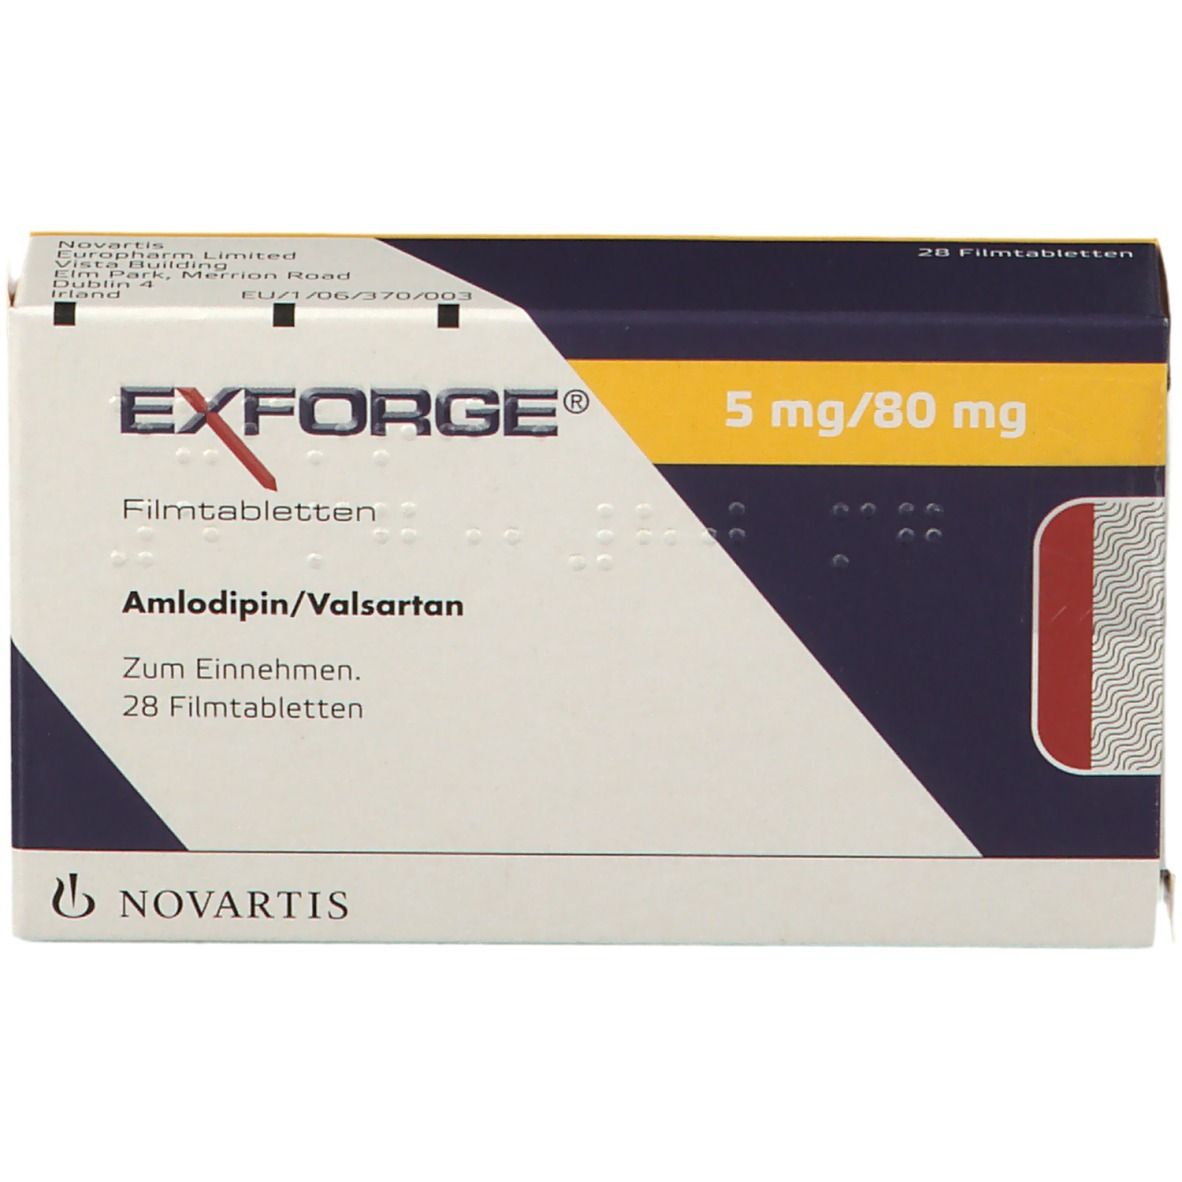 Exforge® 5 mg/80 mg